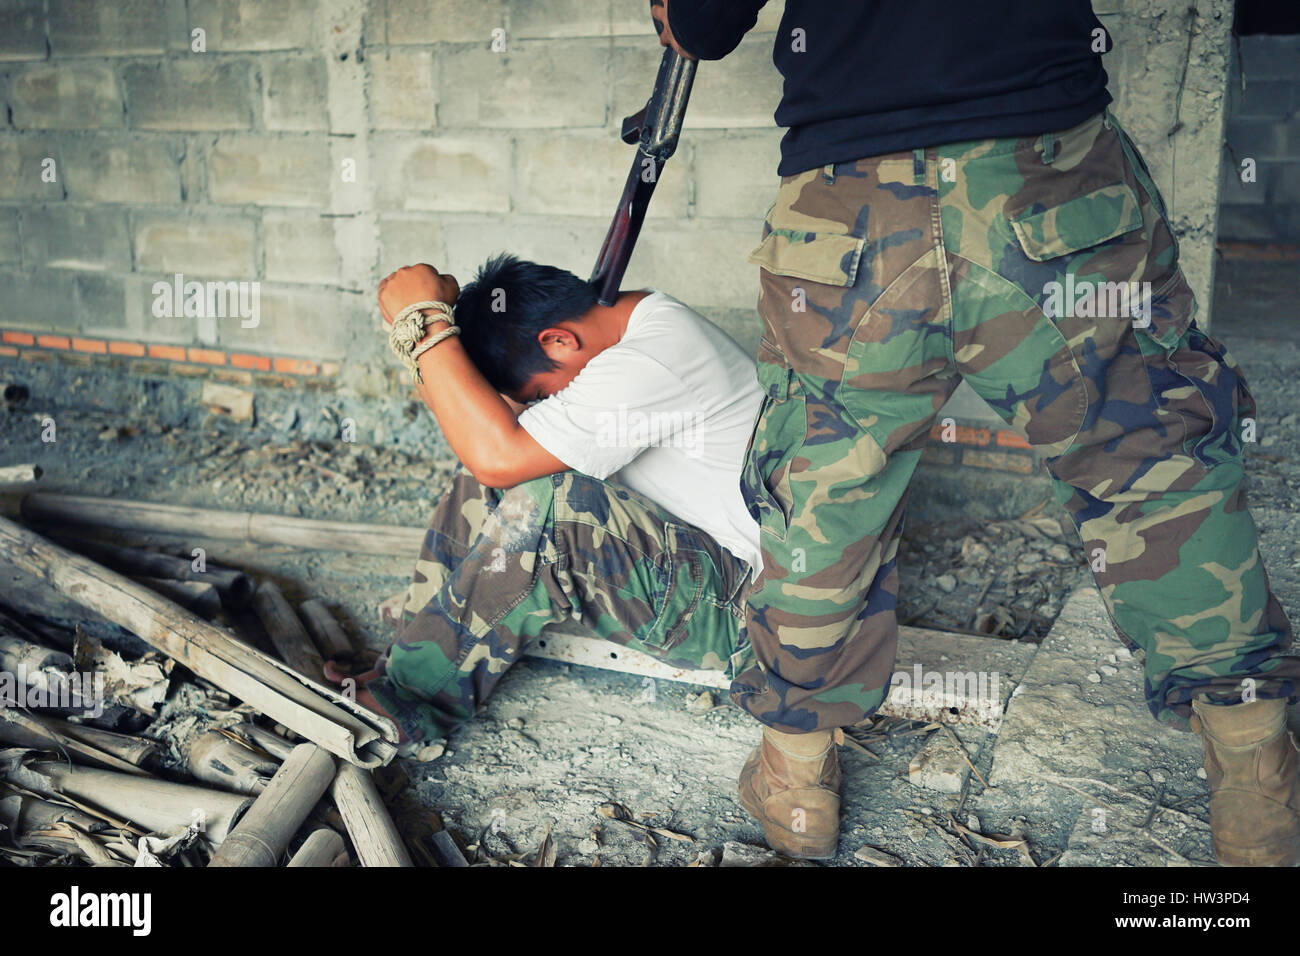 Terrorist in balaclava threatening with gun to man abducted Stock Photo